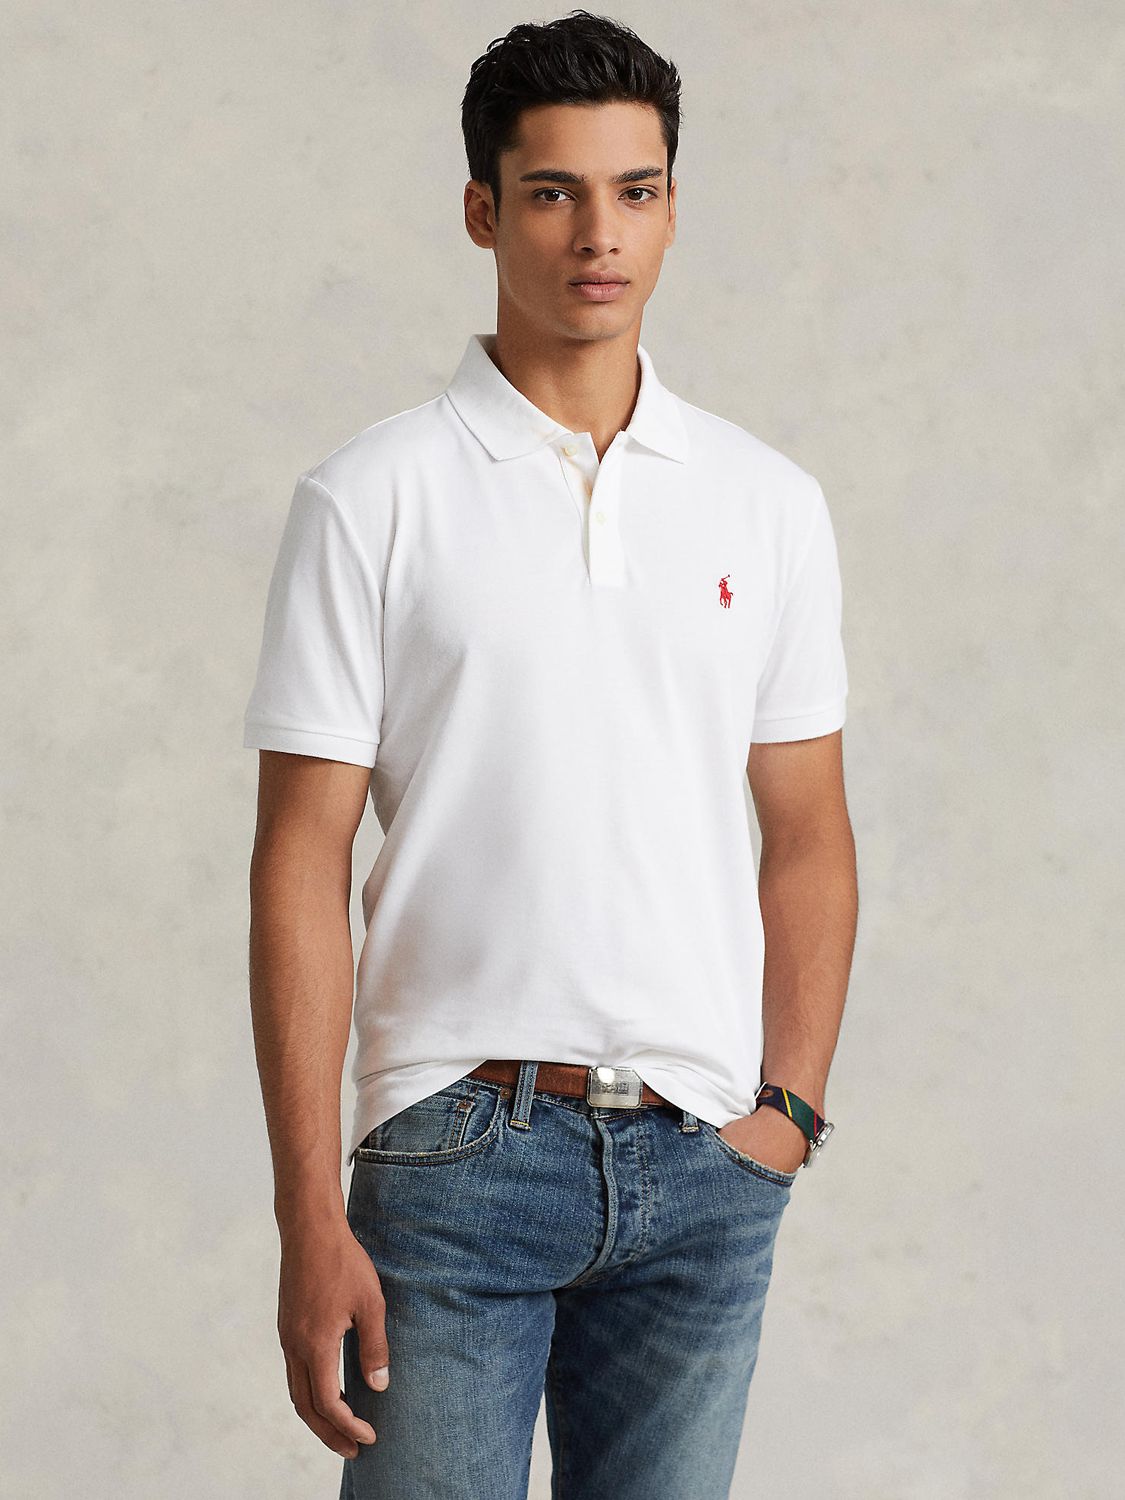 Polo Golf by Ralph Lauren Polo Shirt, Pure White, L